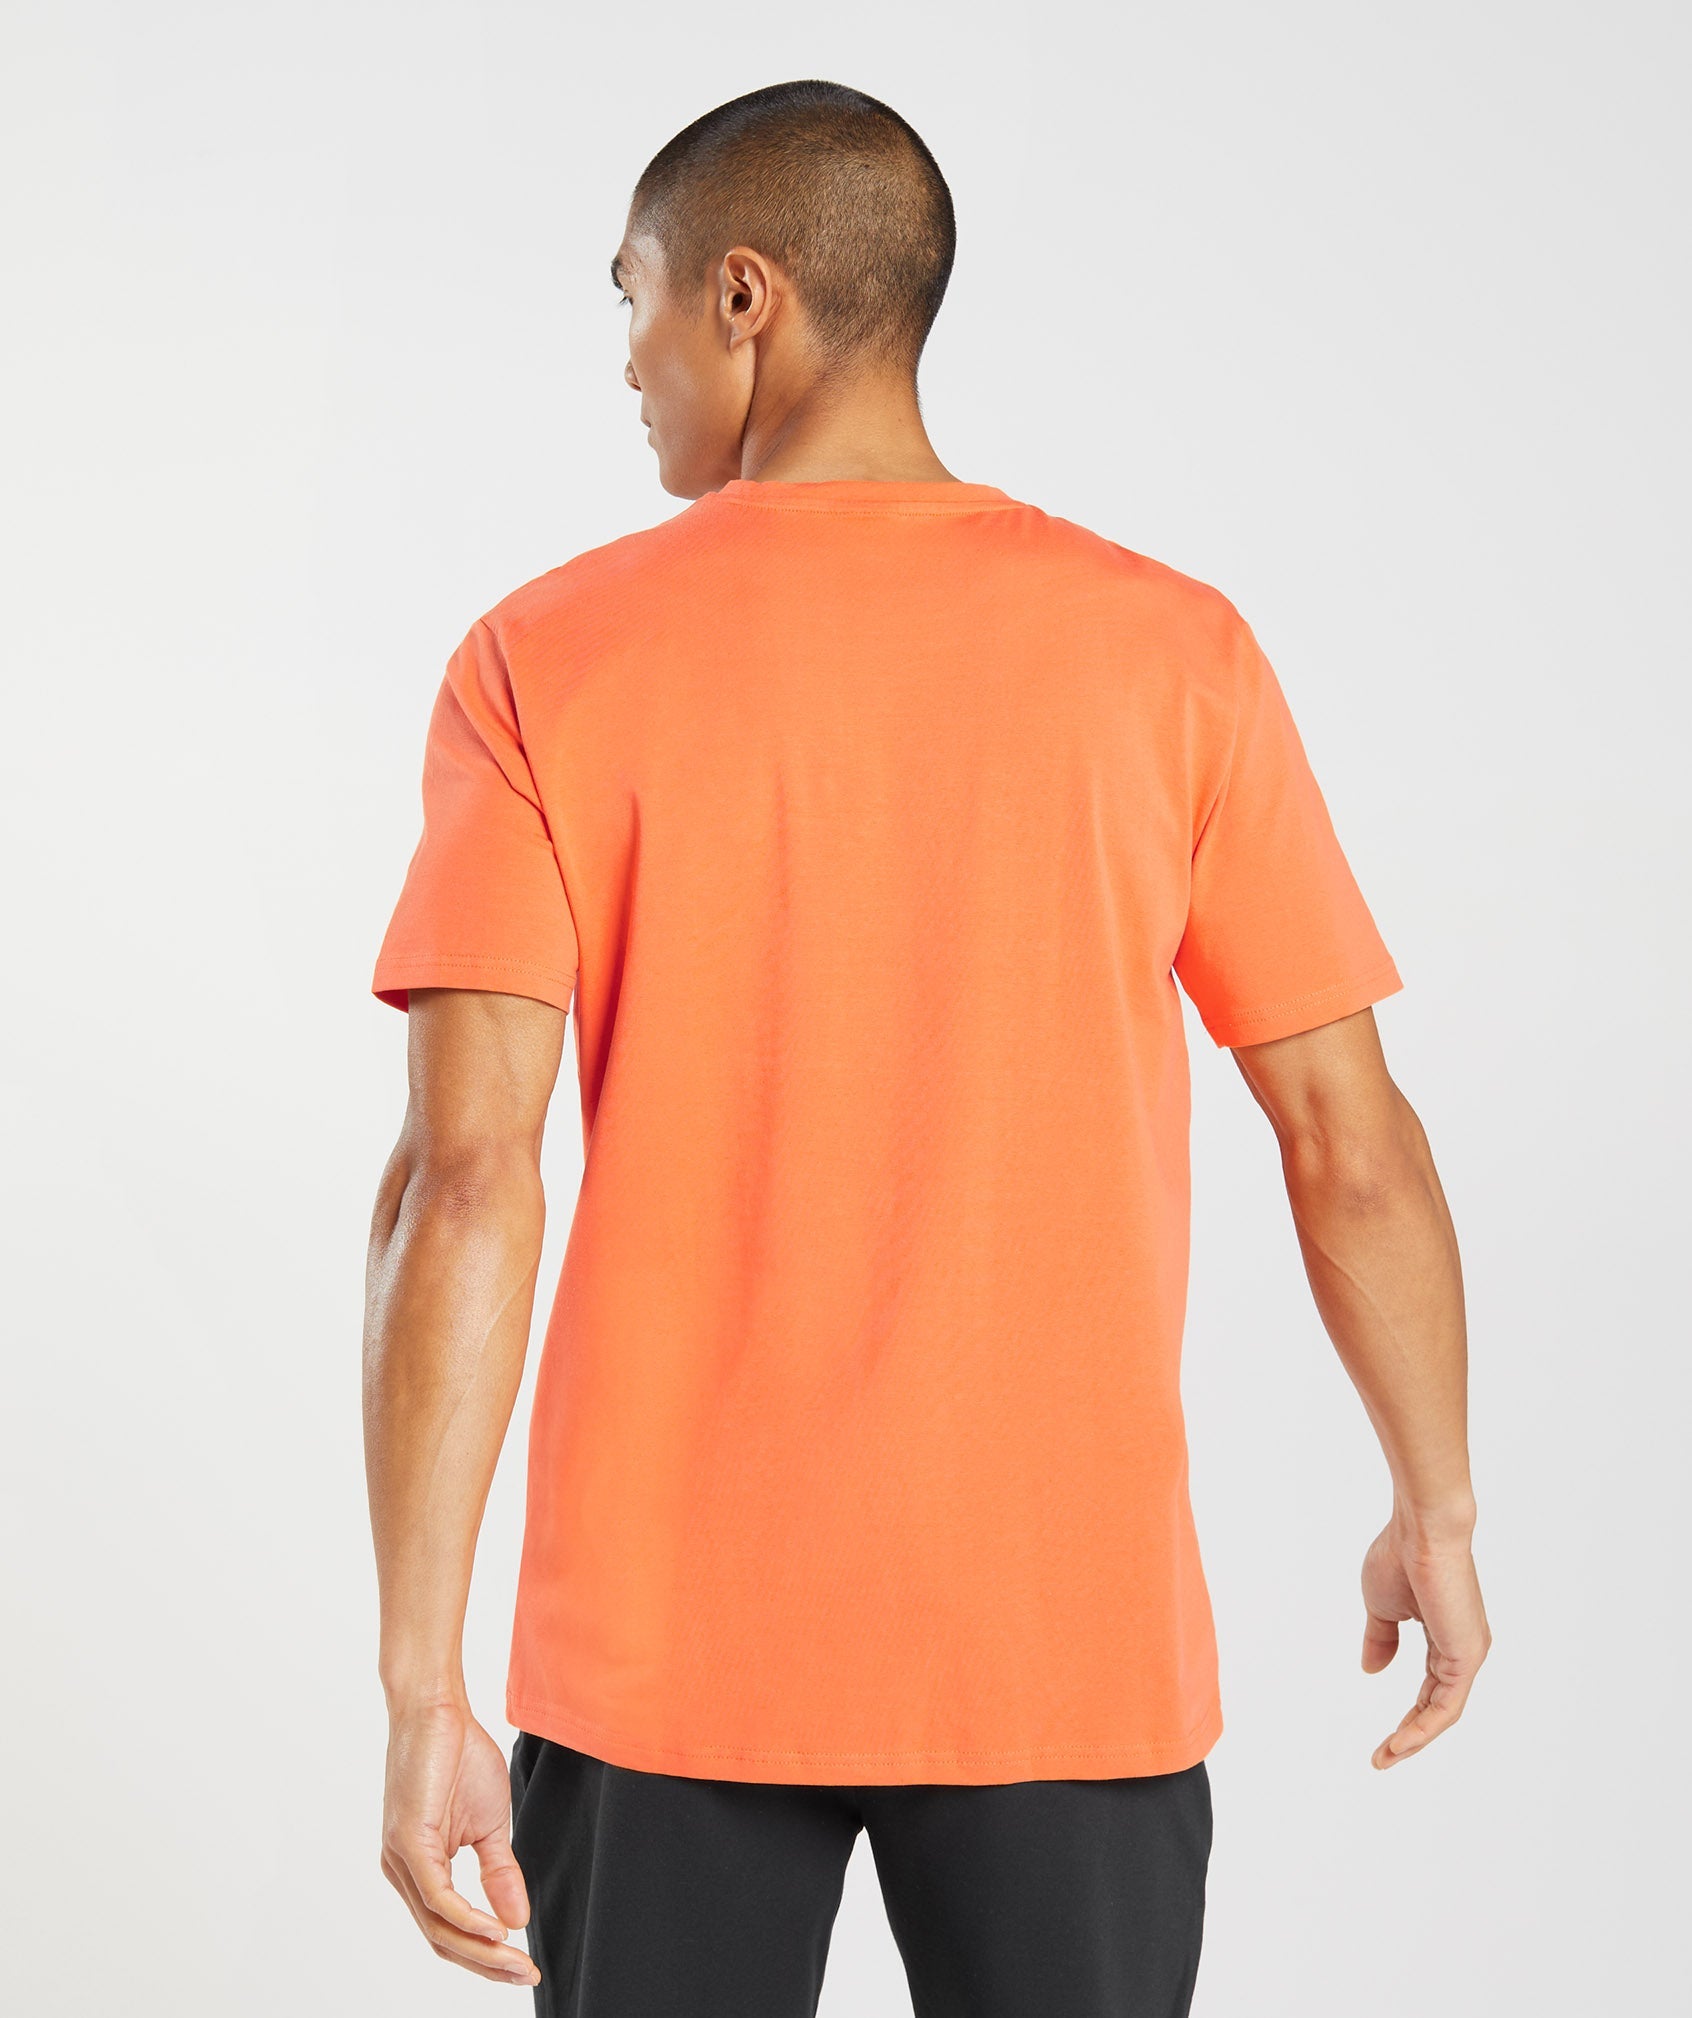 Outline T-Shirt in Zesty Orange - view 2